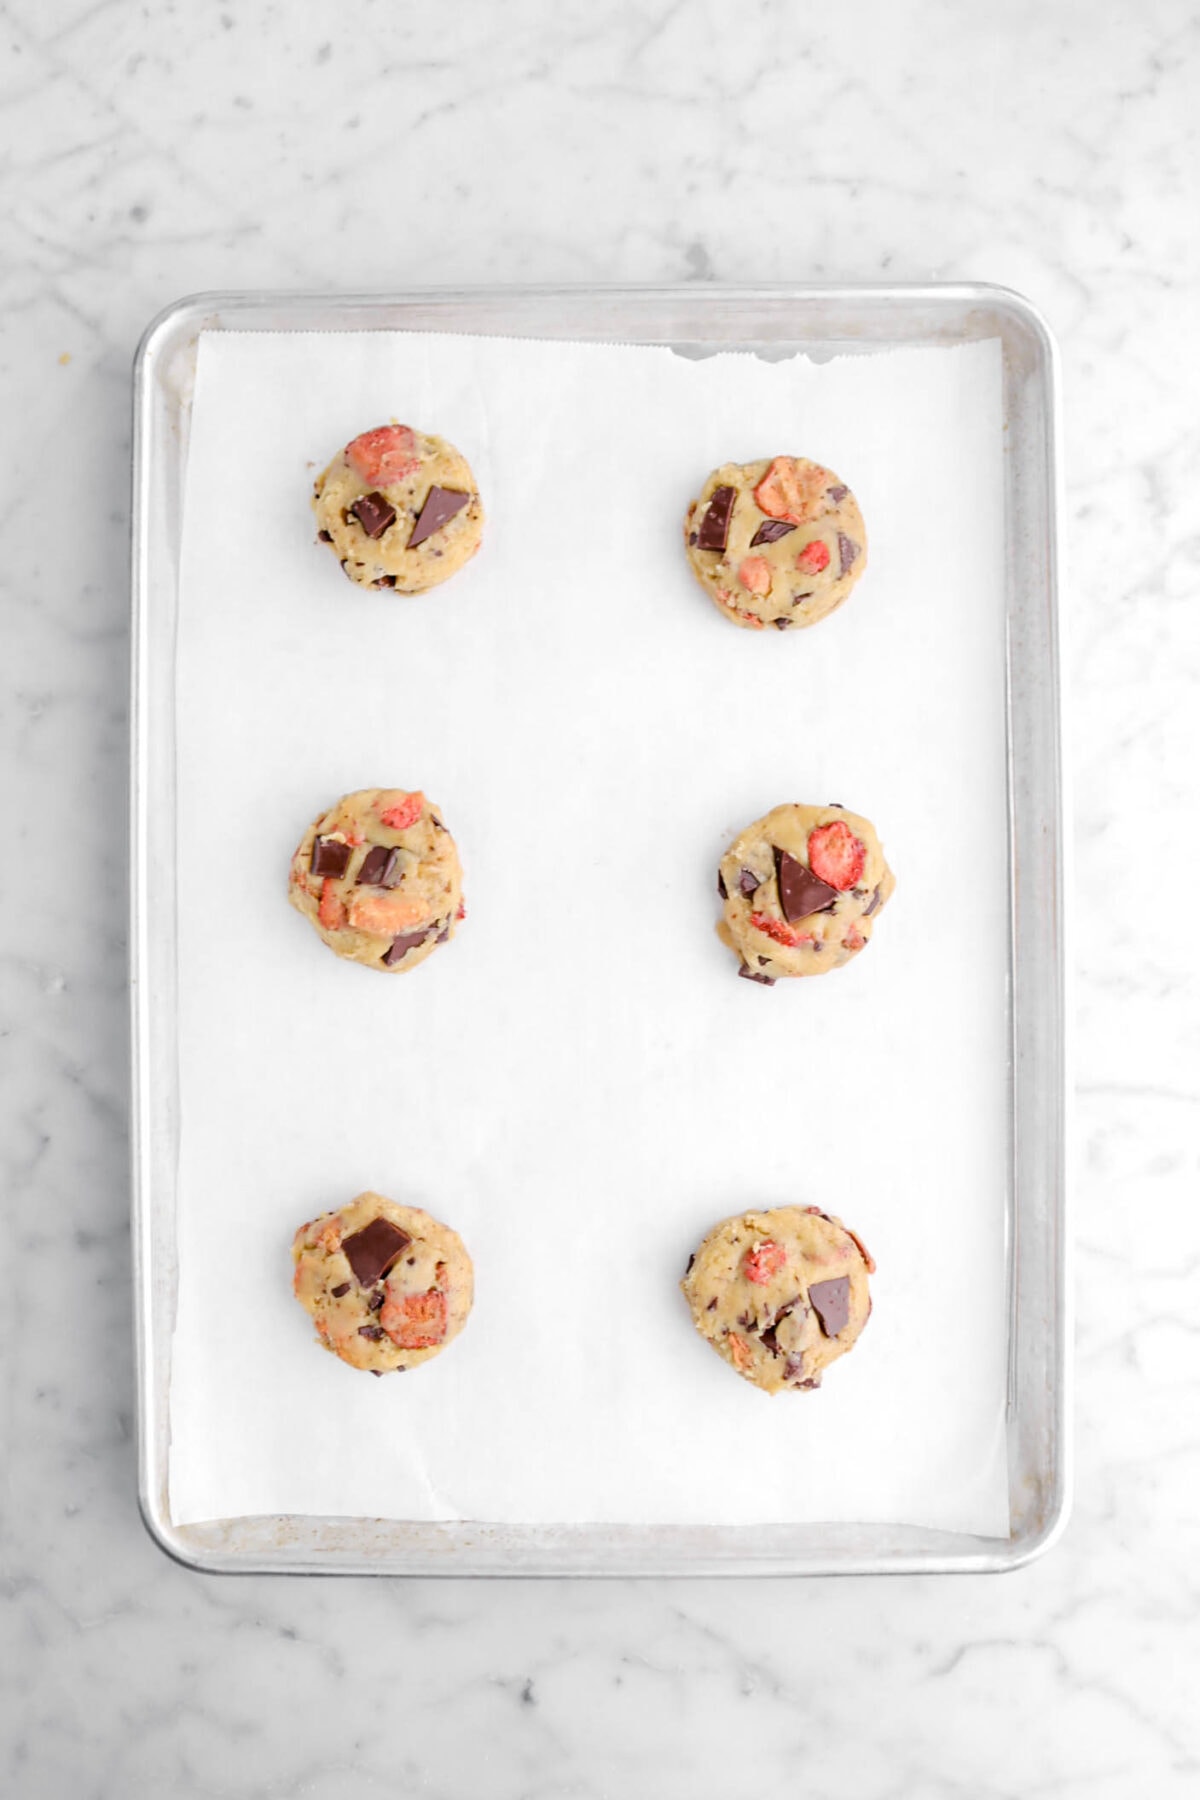 six cookie dough balls on lined sheet pan.